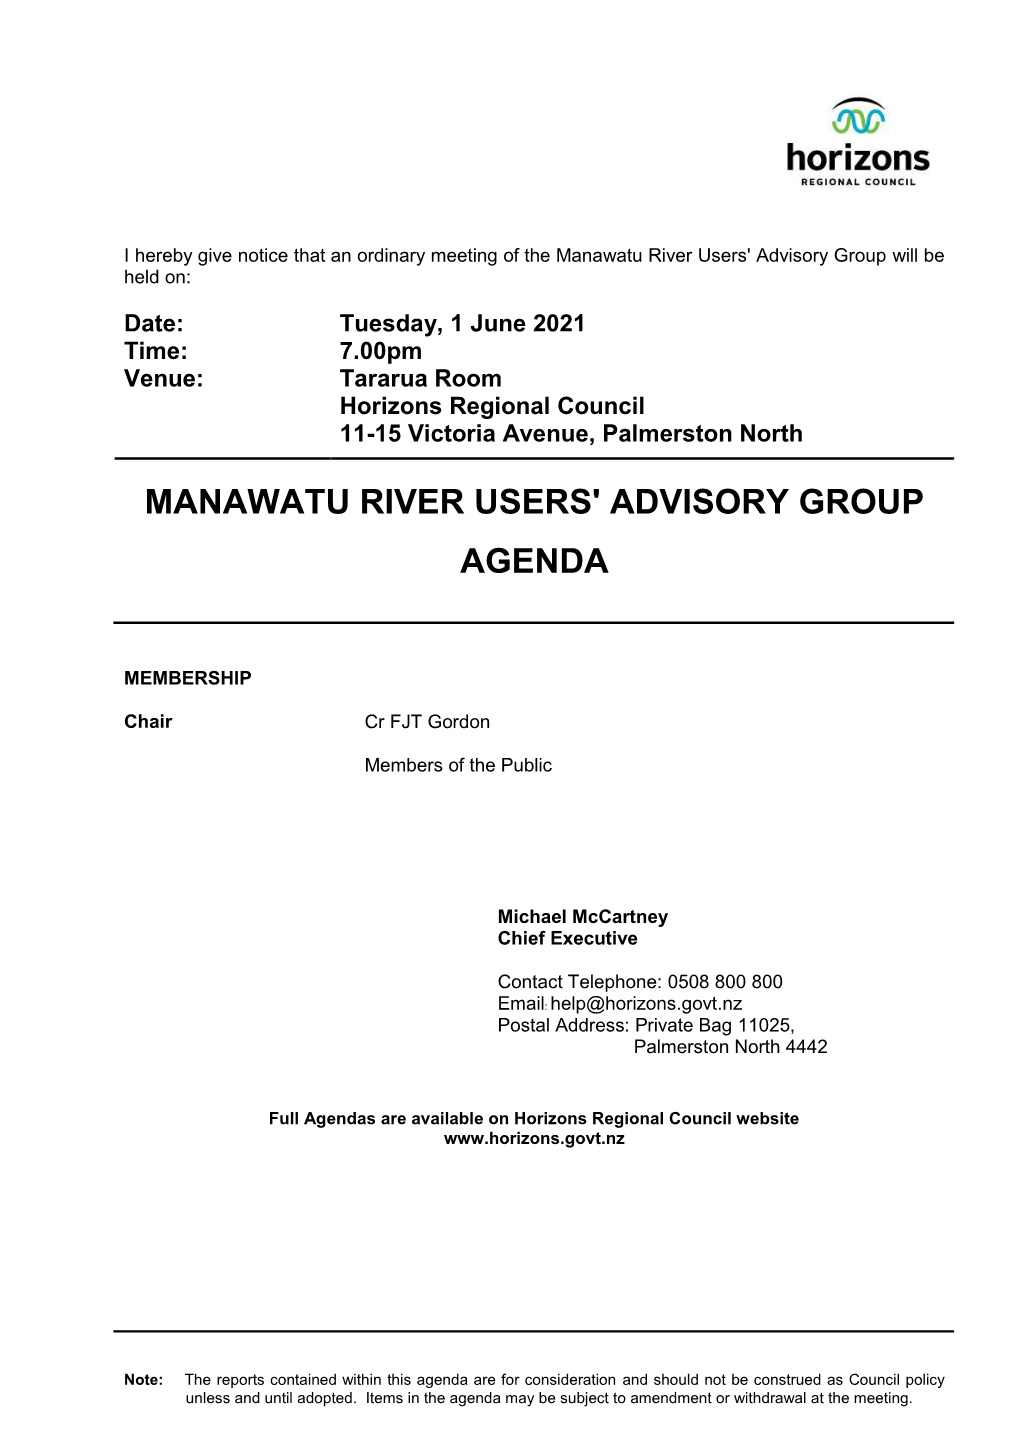 Agenda of Manawatu River Users